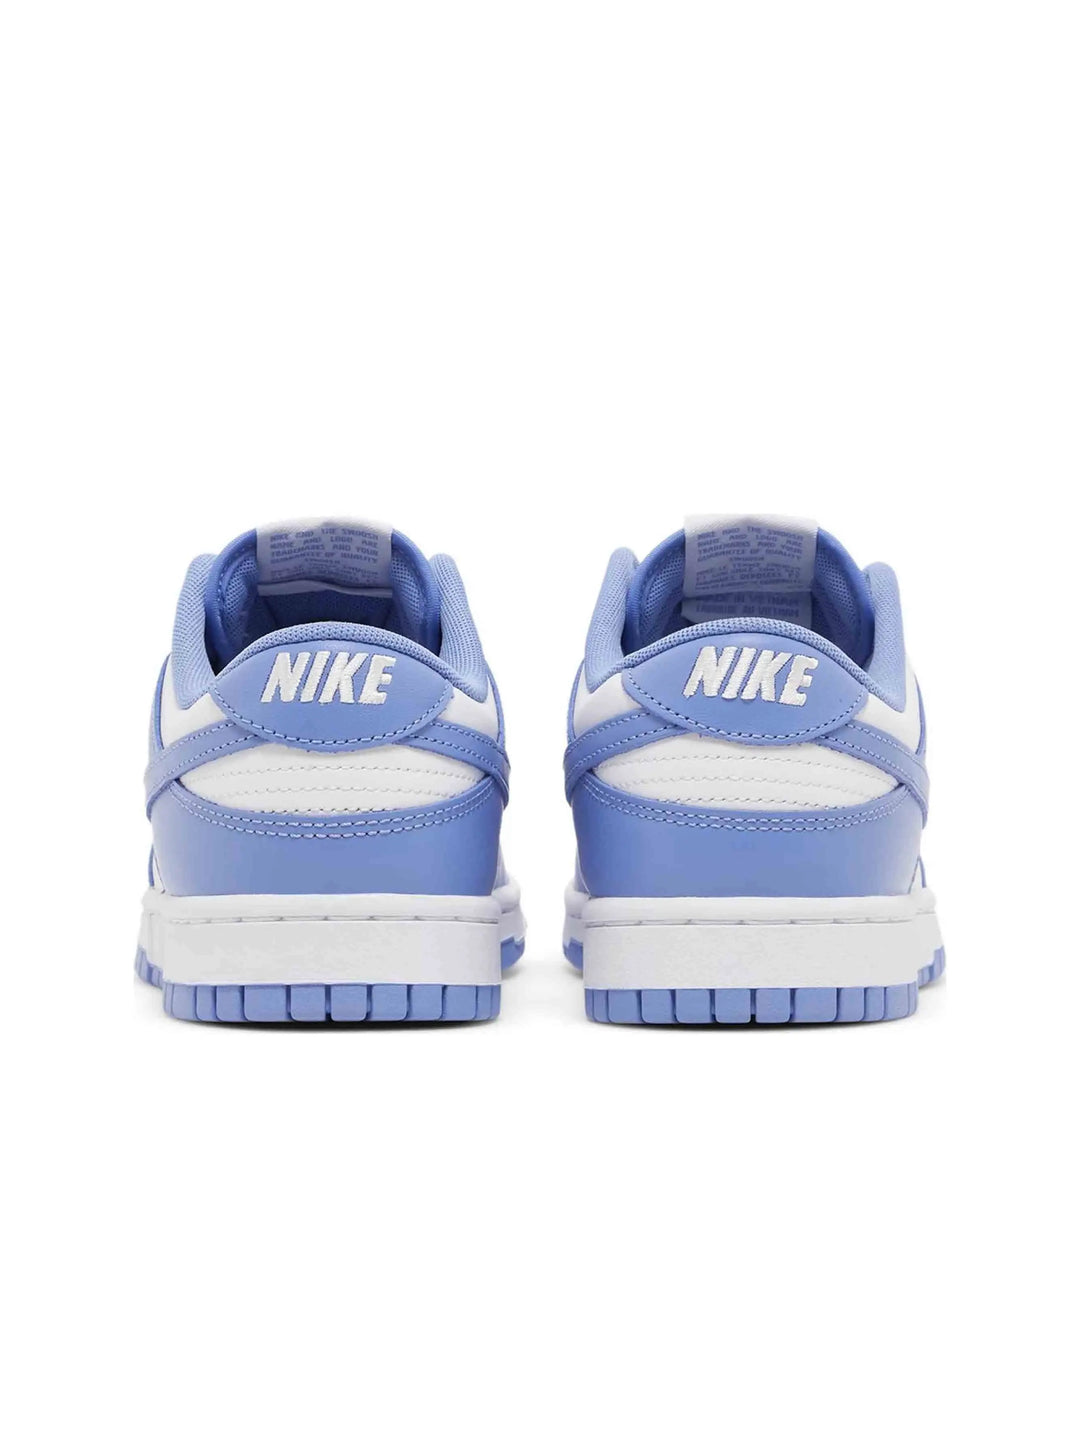 Nike Dunk Low Polar Blue - Prior